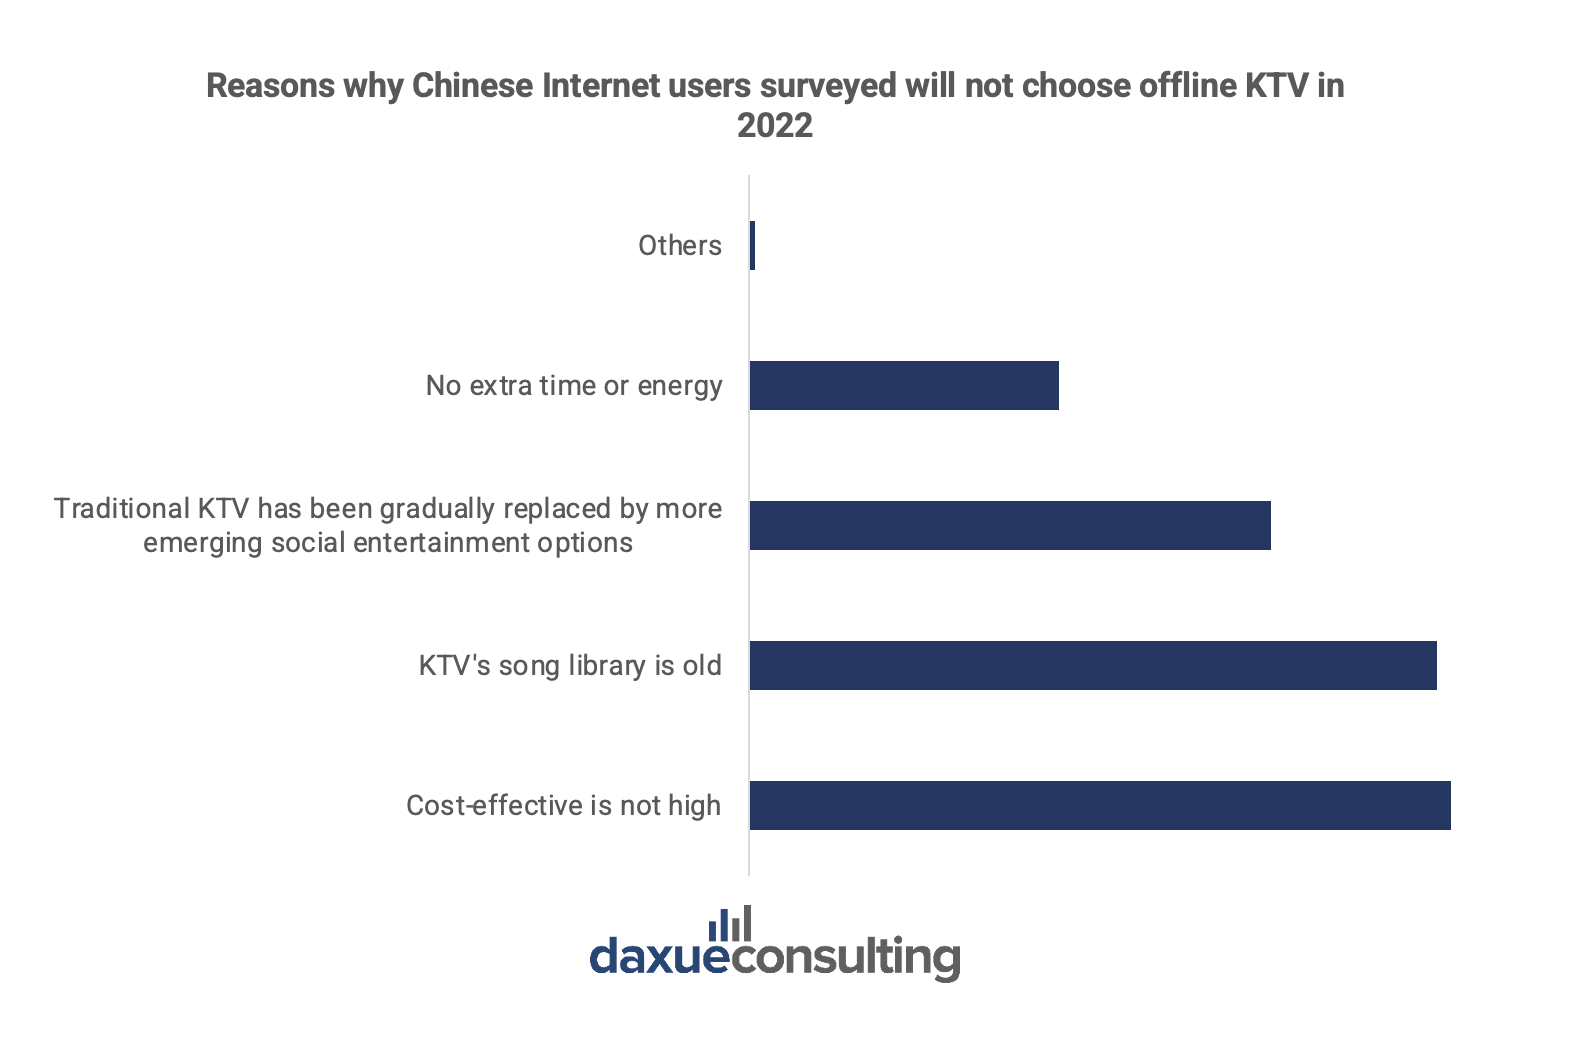 KTV in China: reasons for not choosing KTV as an evening entertainment option